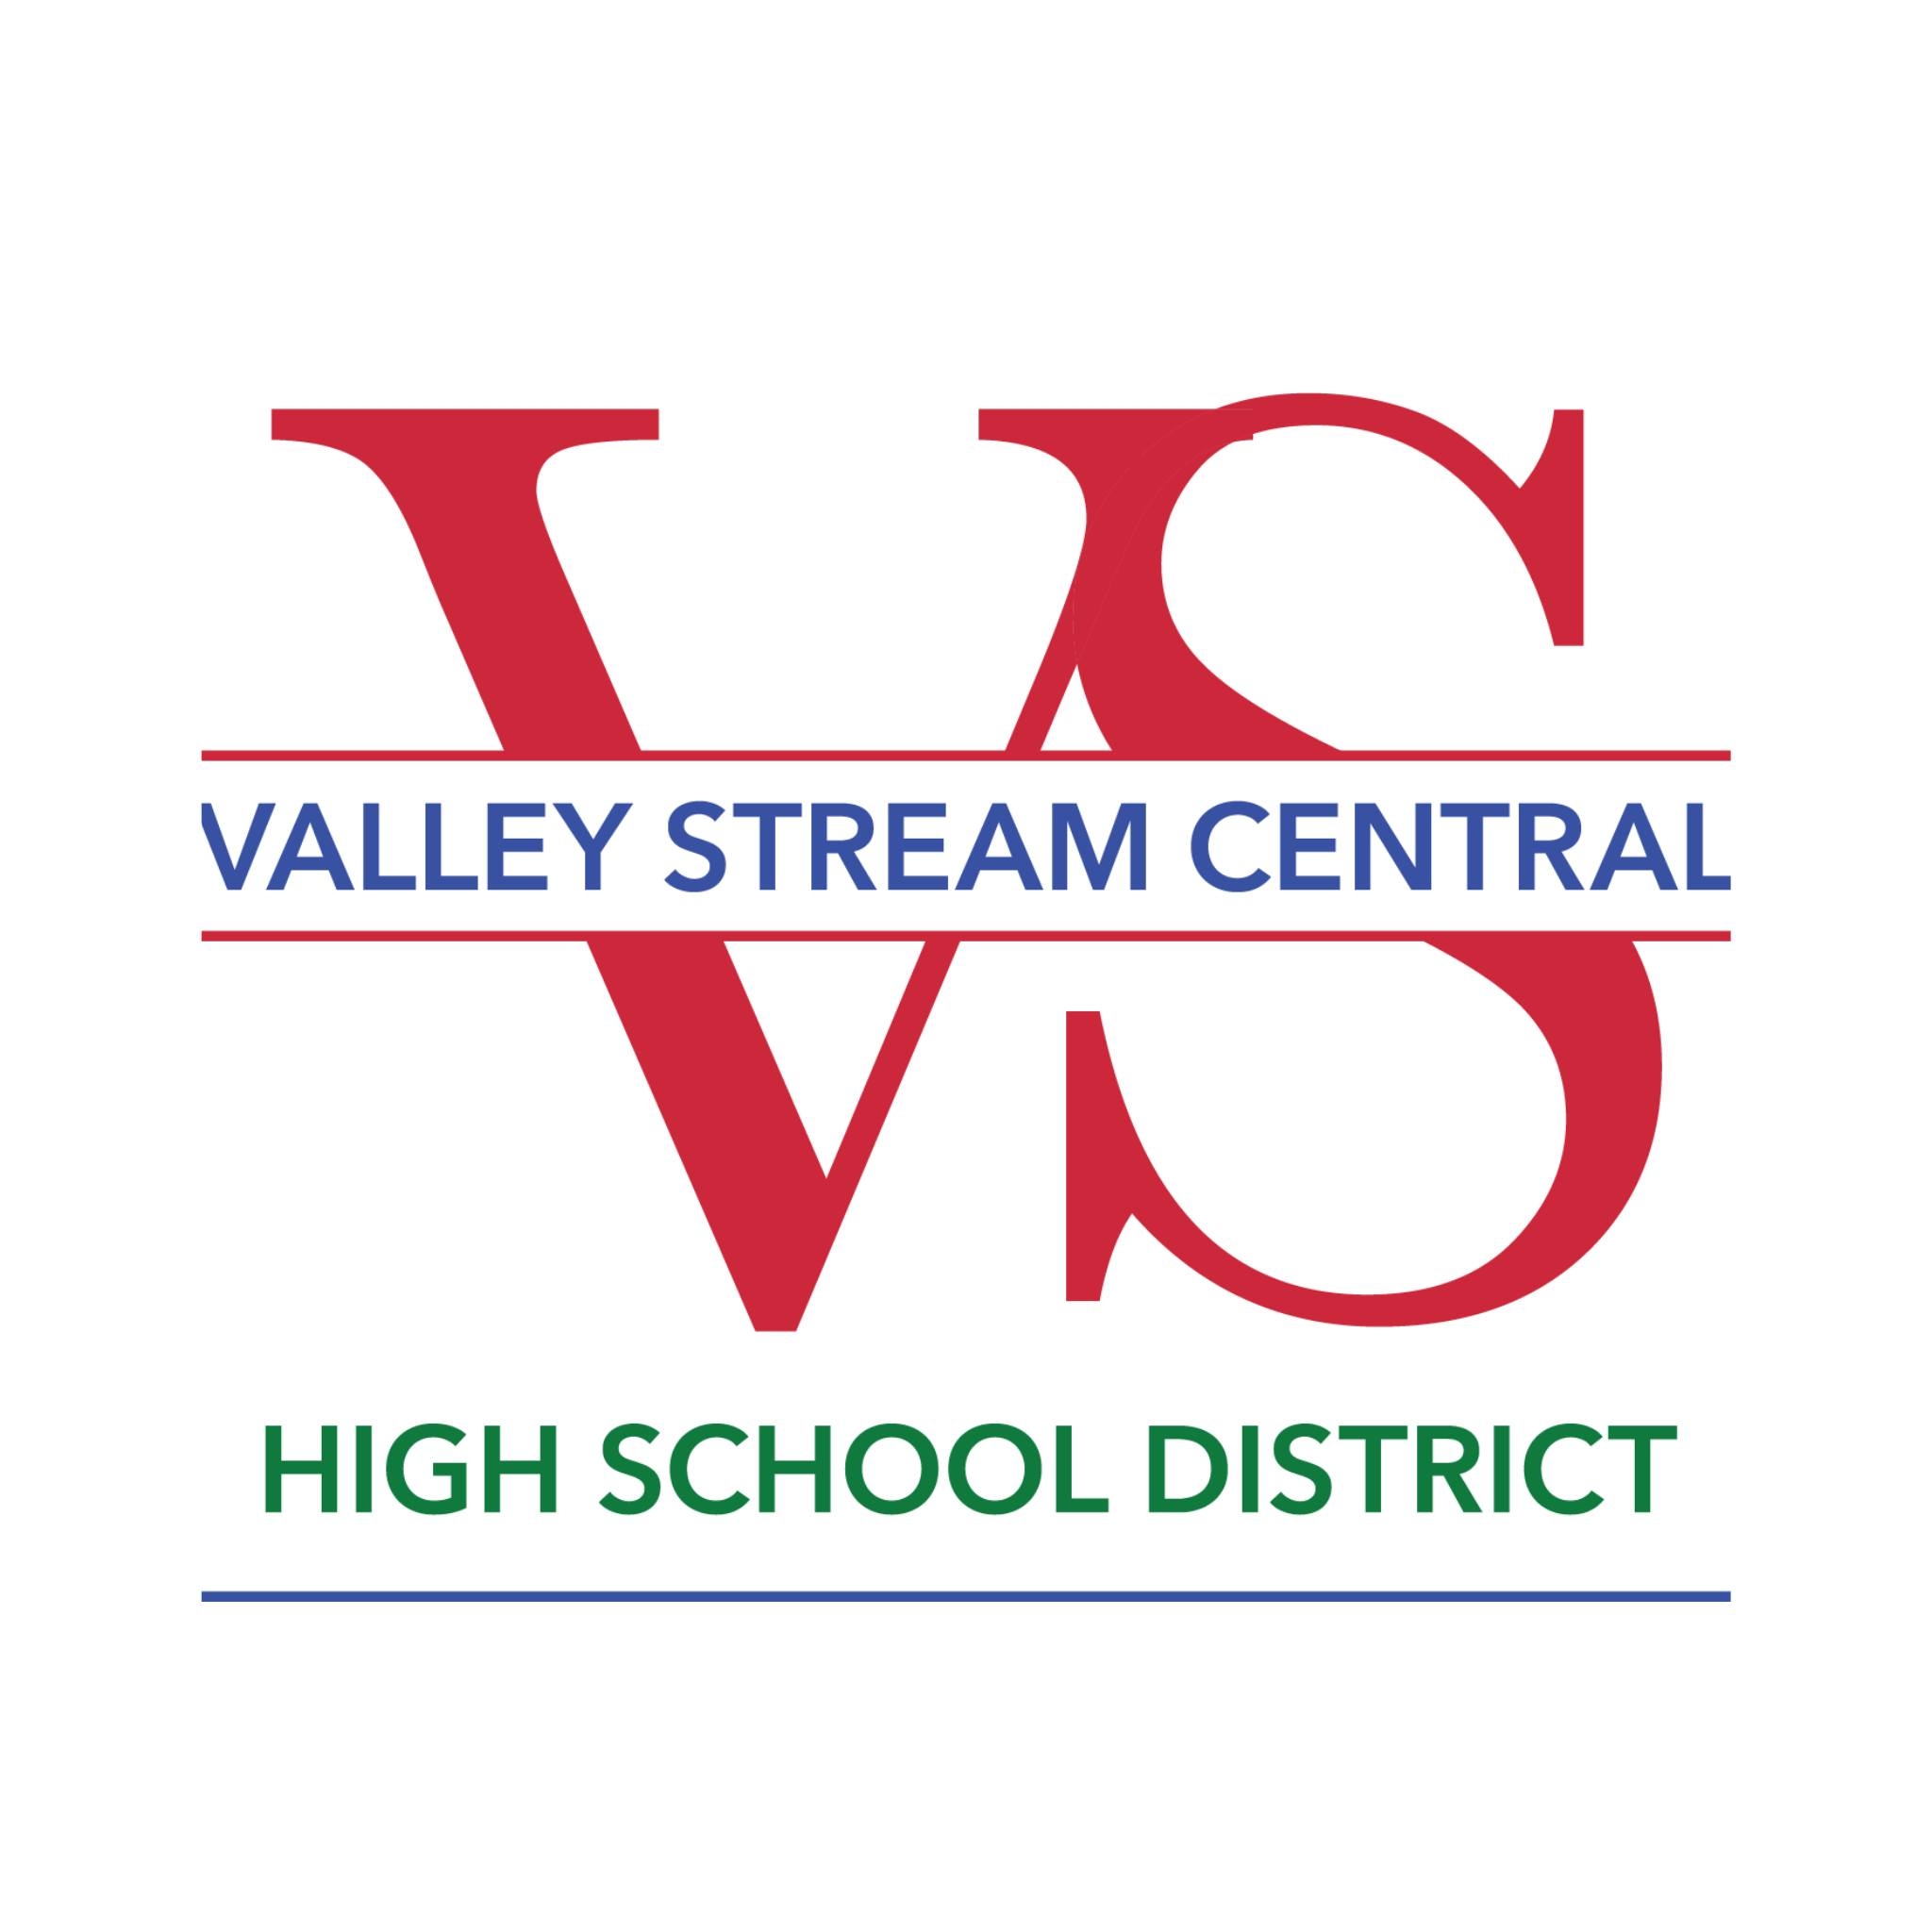 Valley Stream Central High School District